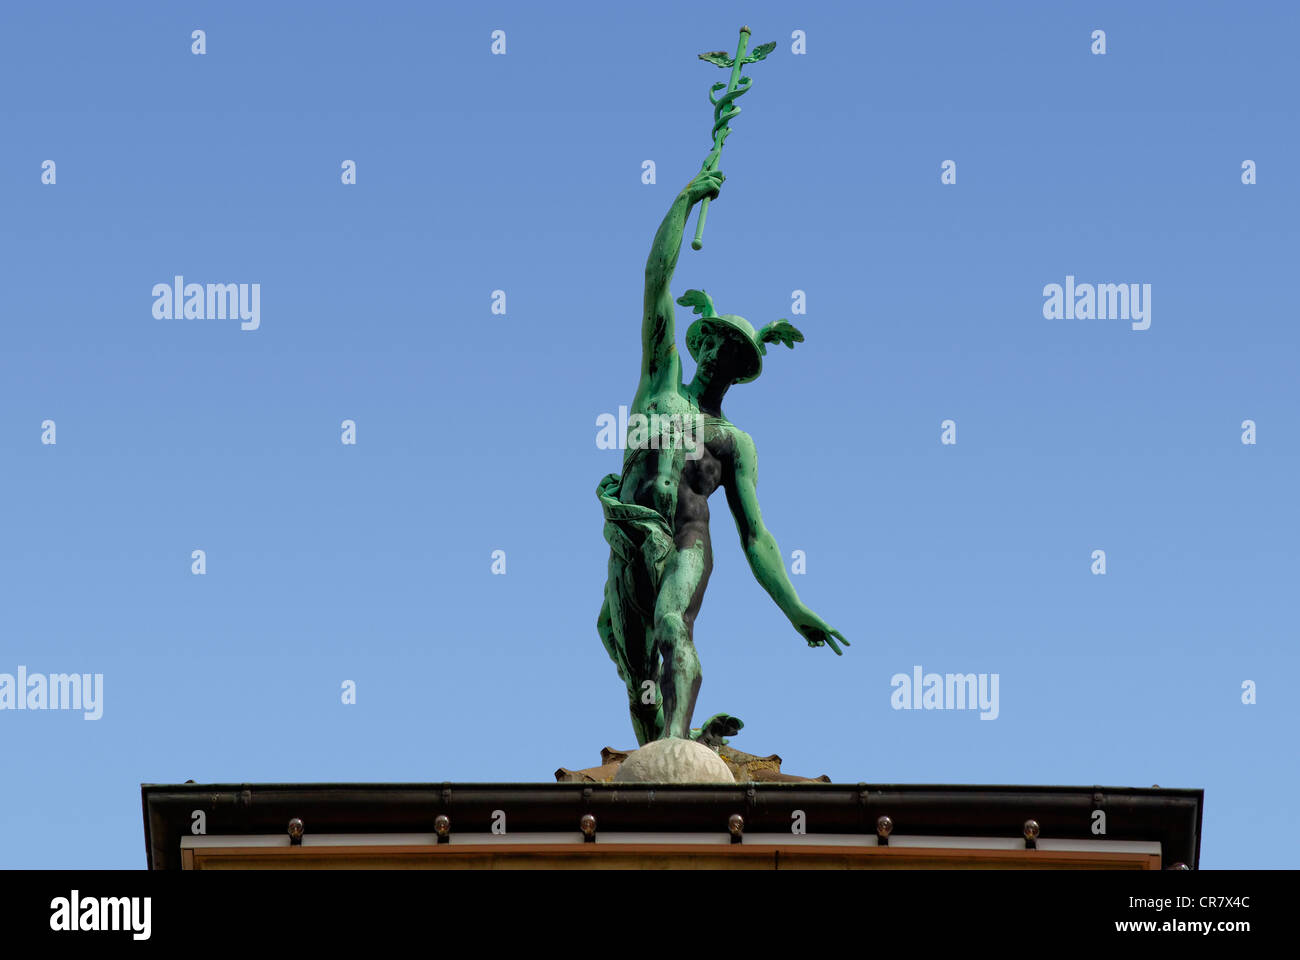 Hermes ou Mercure, messager des dieux, Albstadt, Allemagne, Europe. Banque D'Images